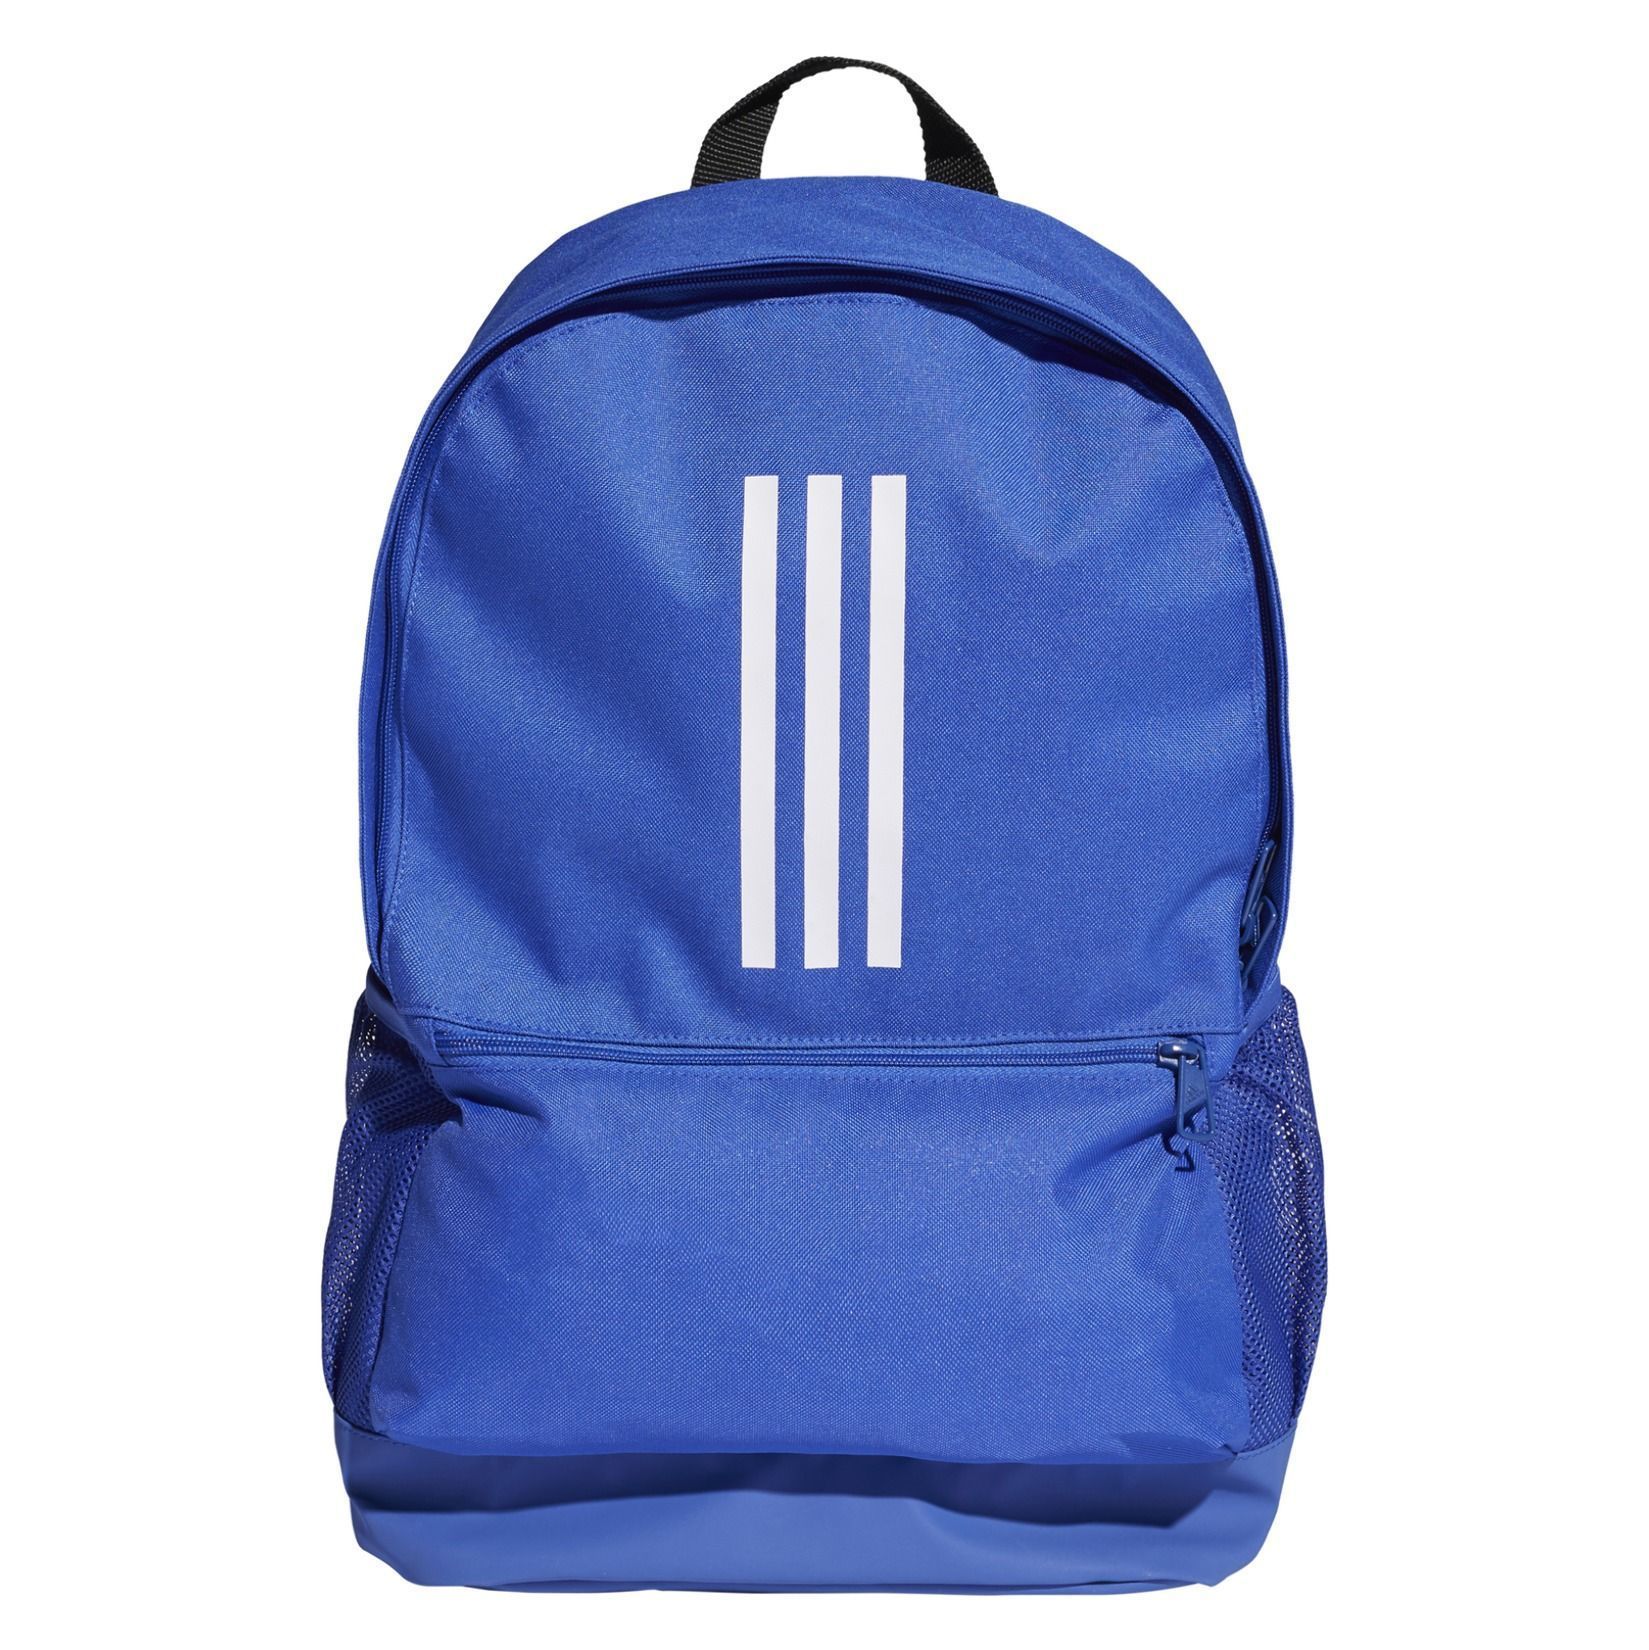 Adidas Tiro Backpack